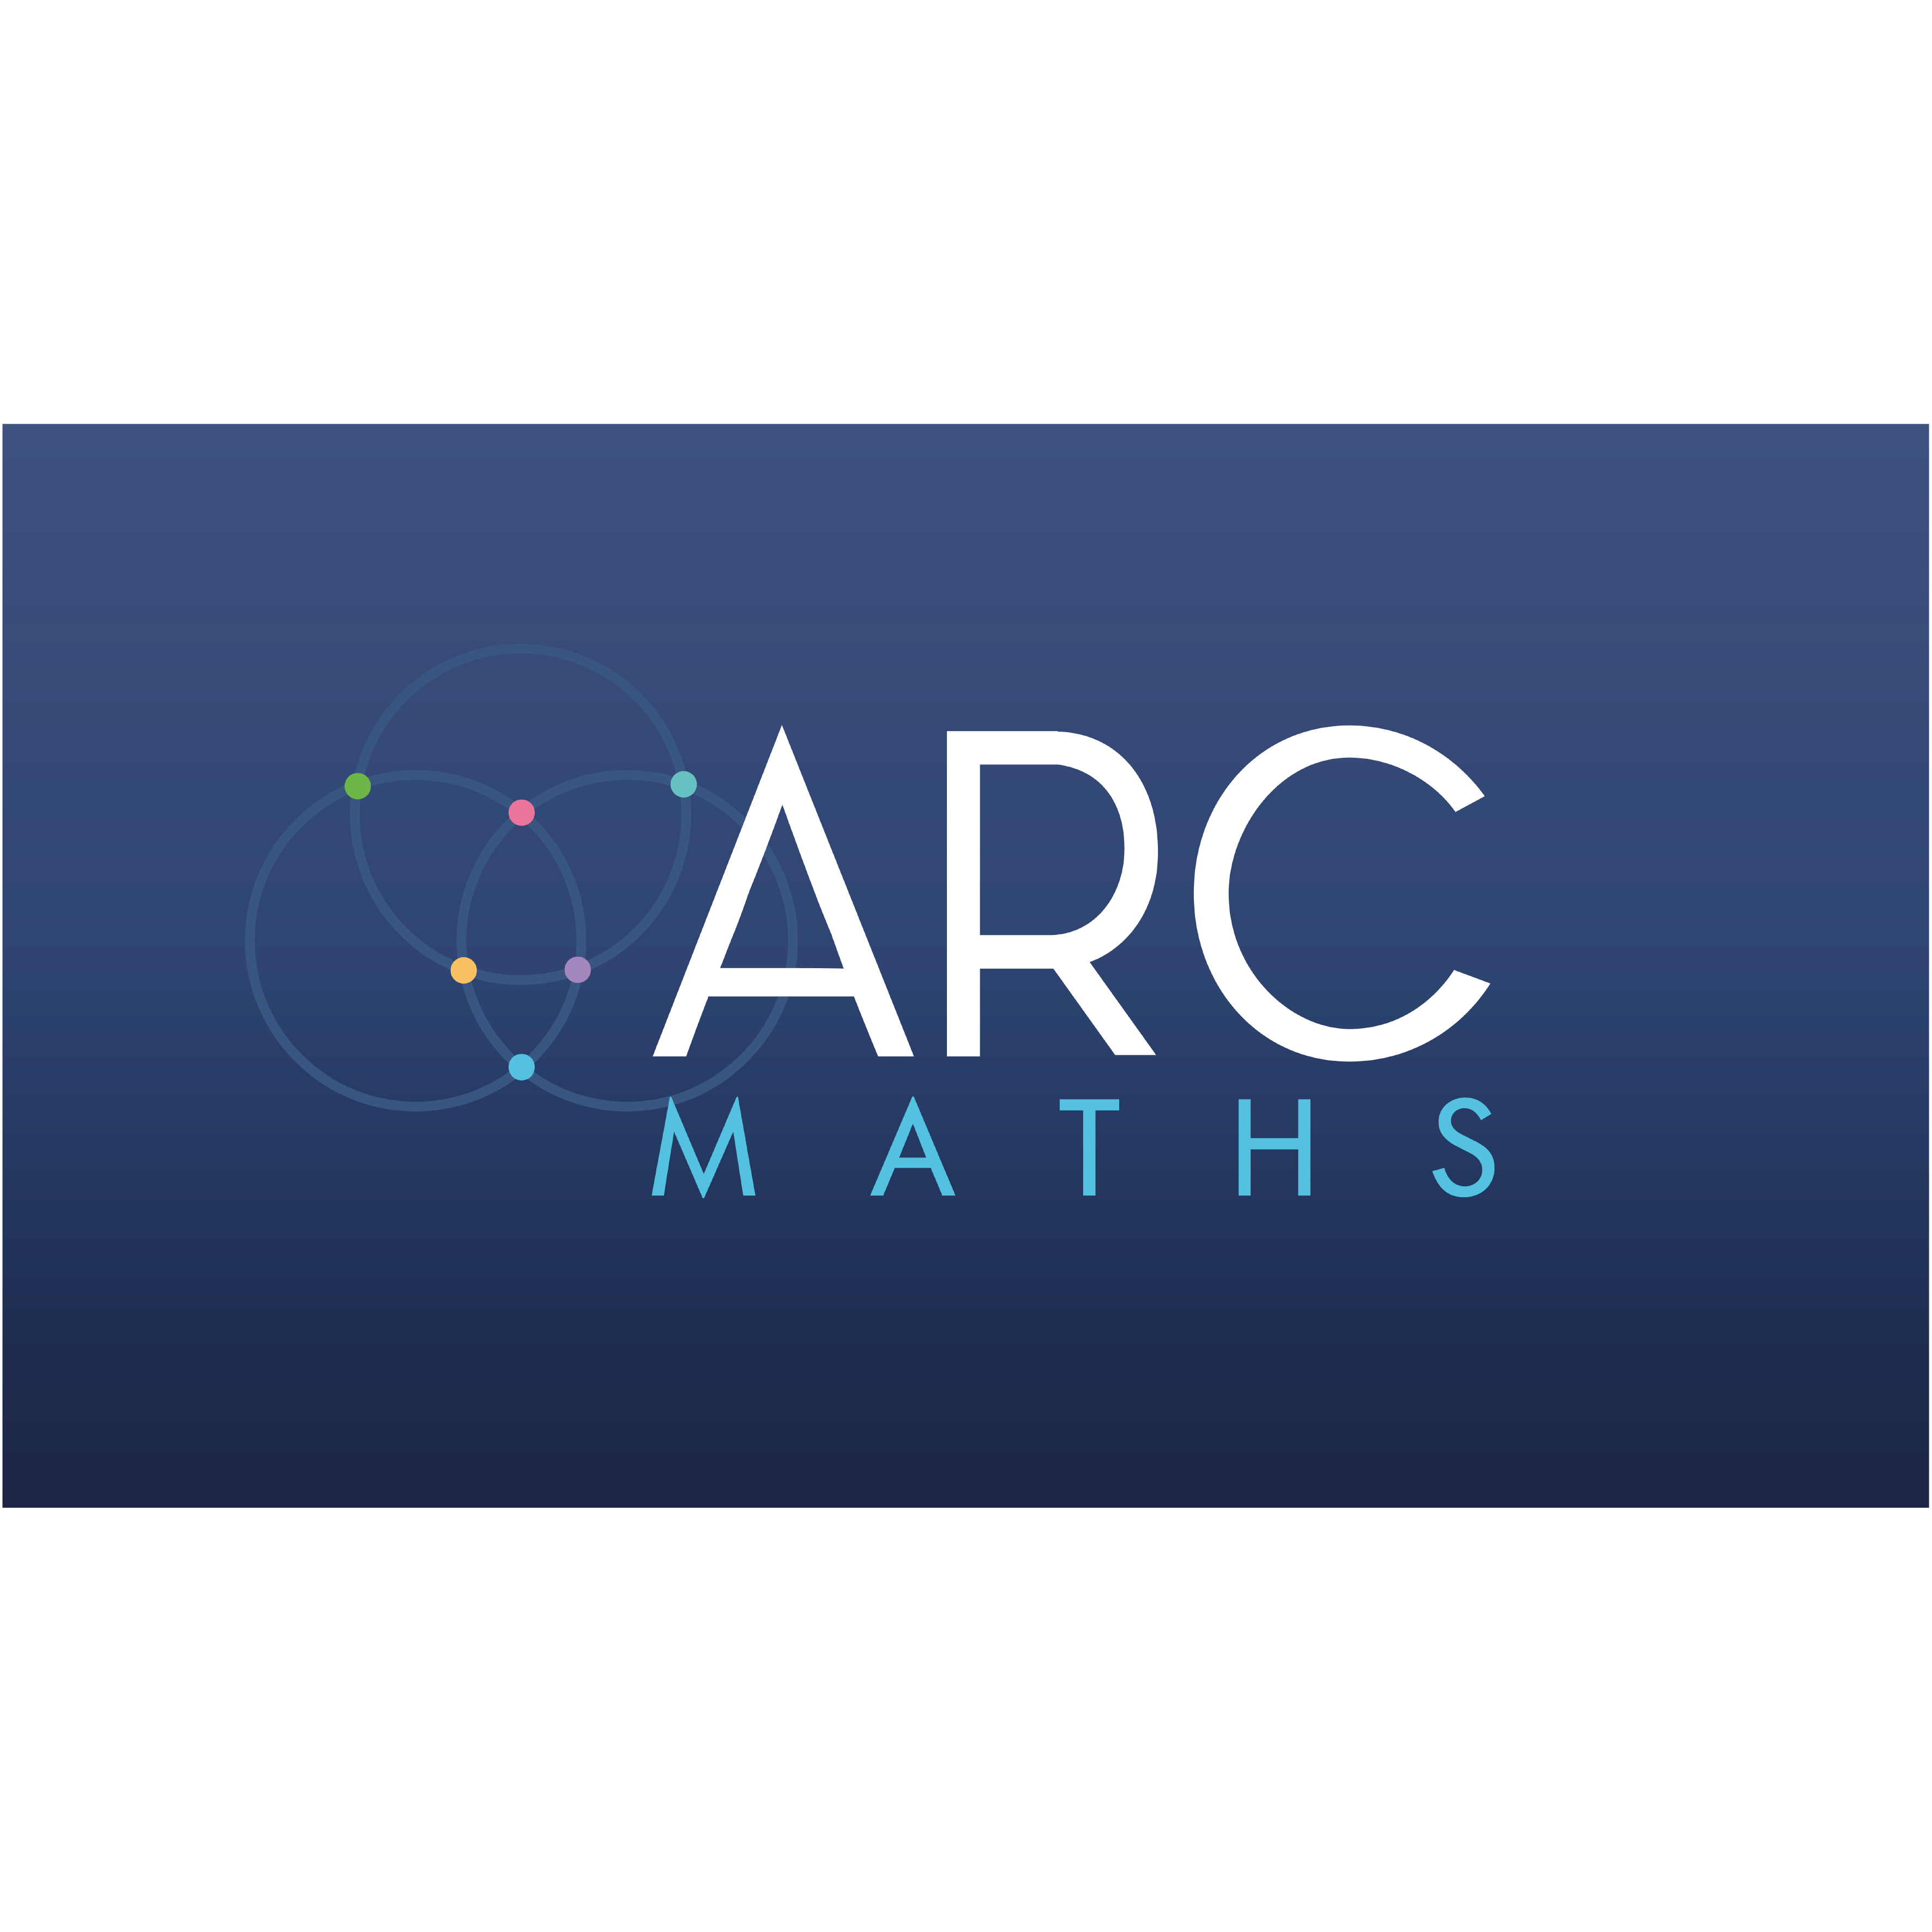 'Arc Maths'